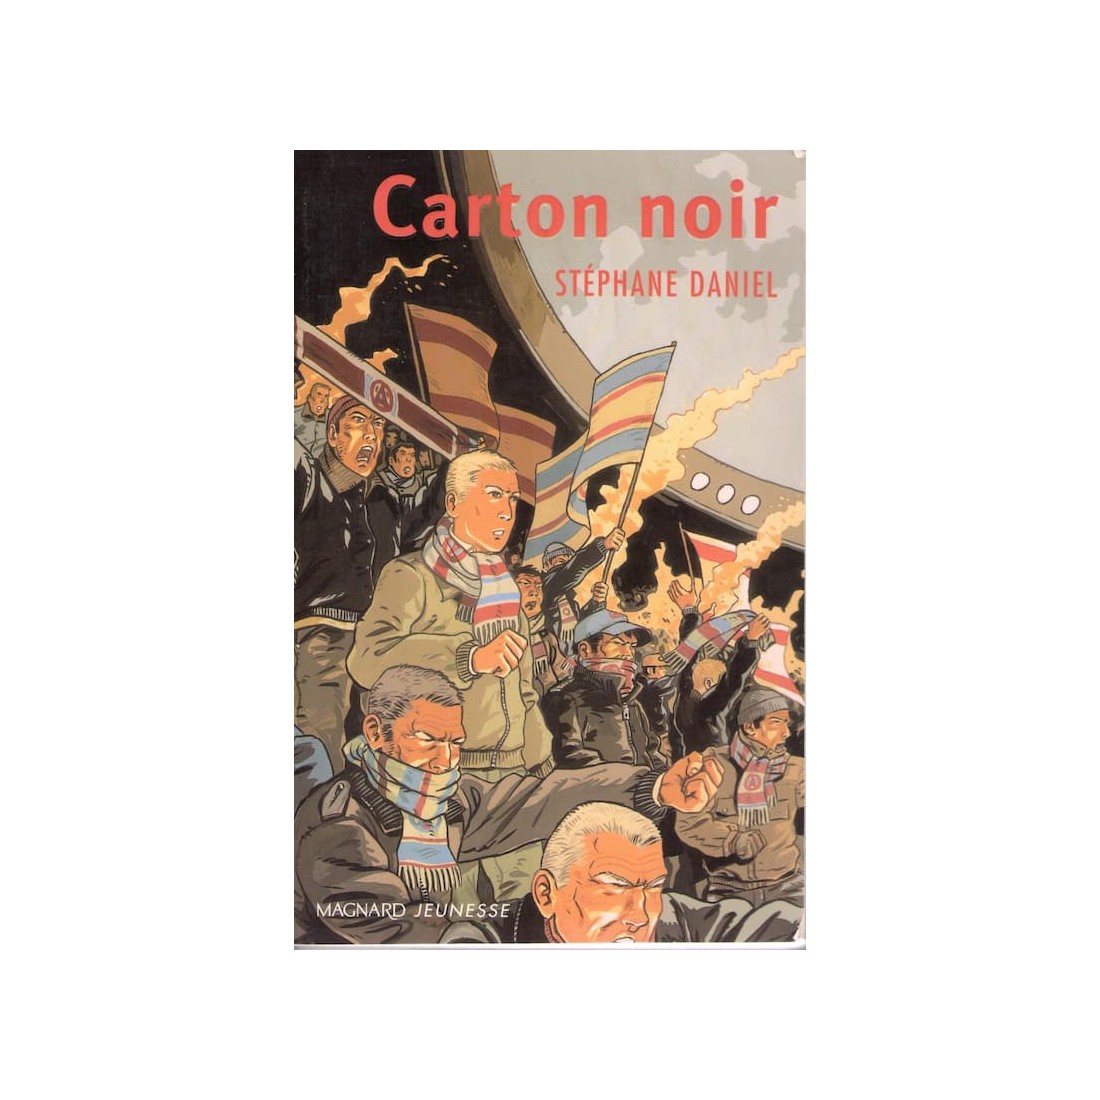 Carton noir - Roman de Stéphane Daniel - OCazlivres.com